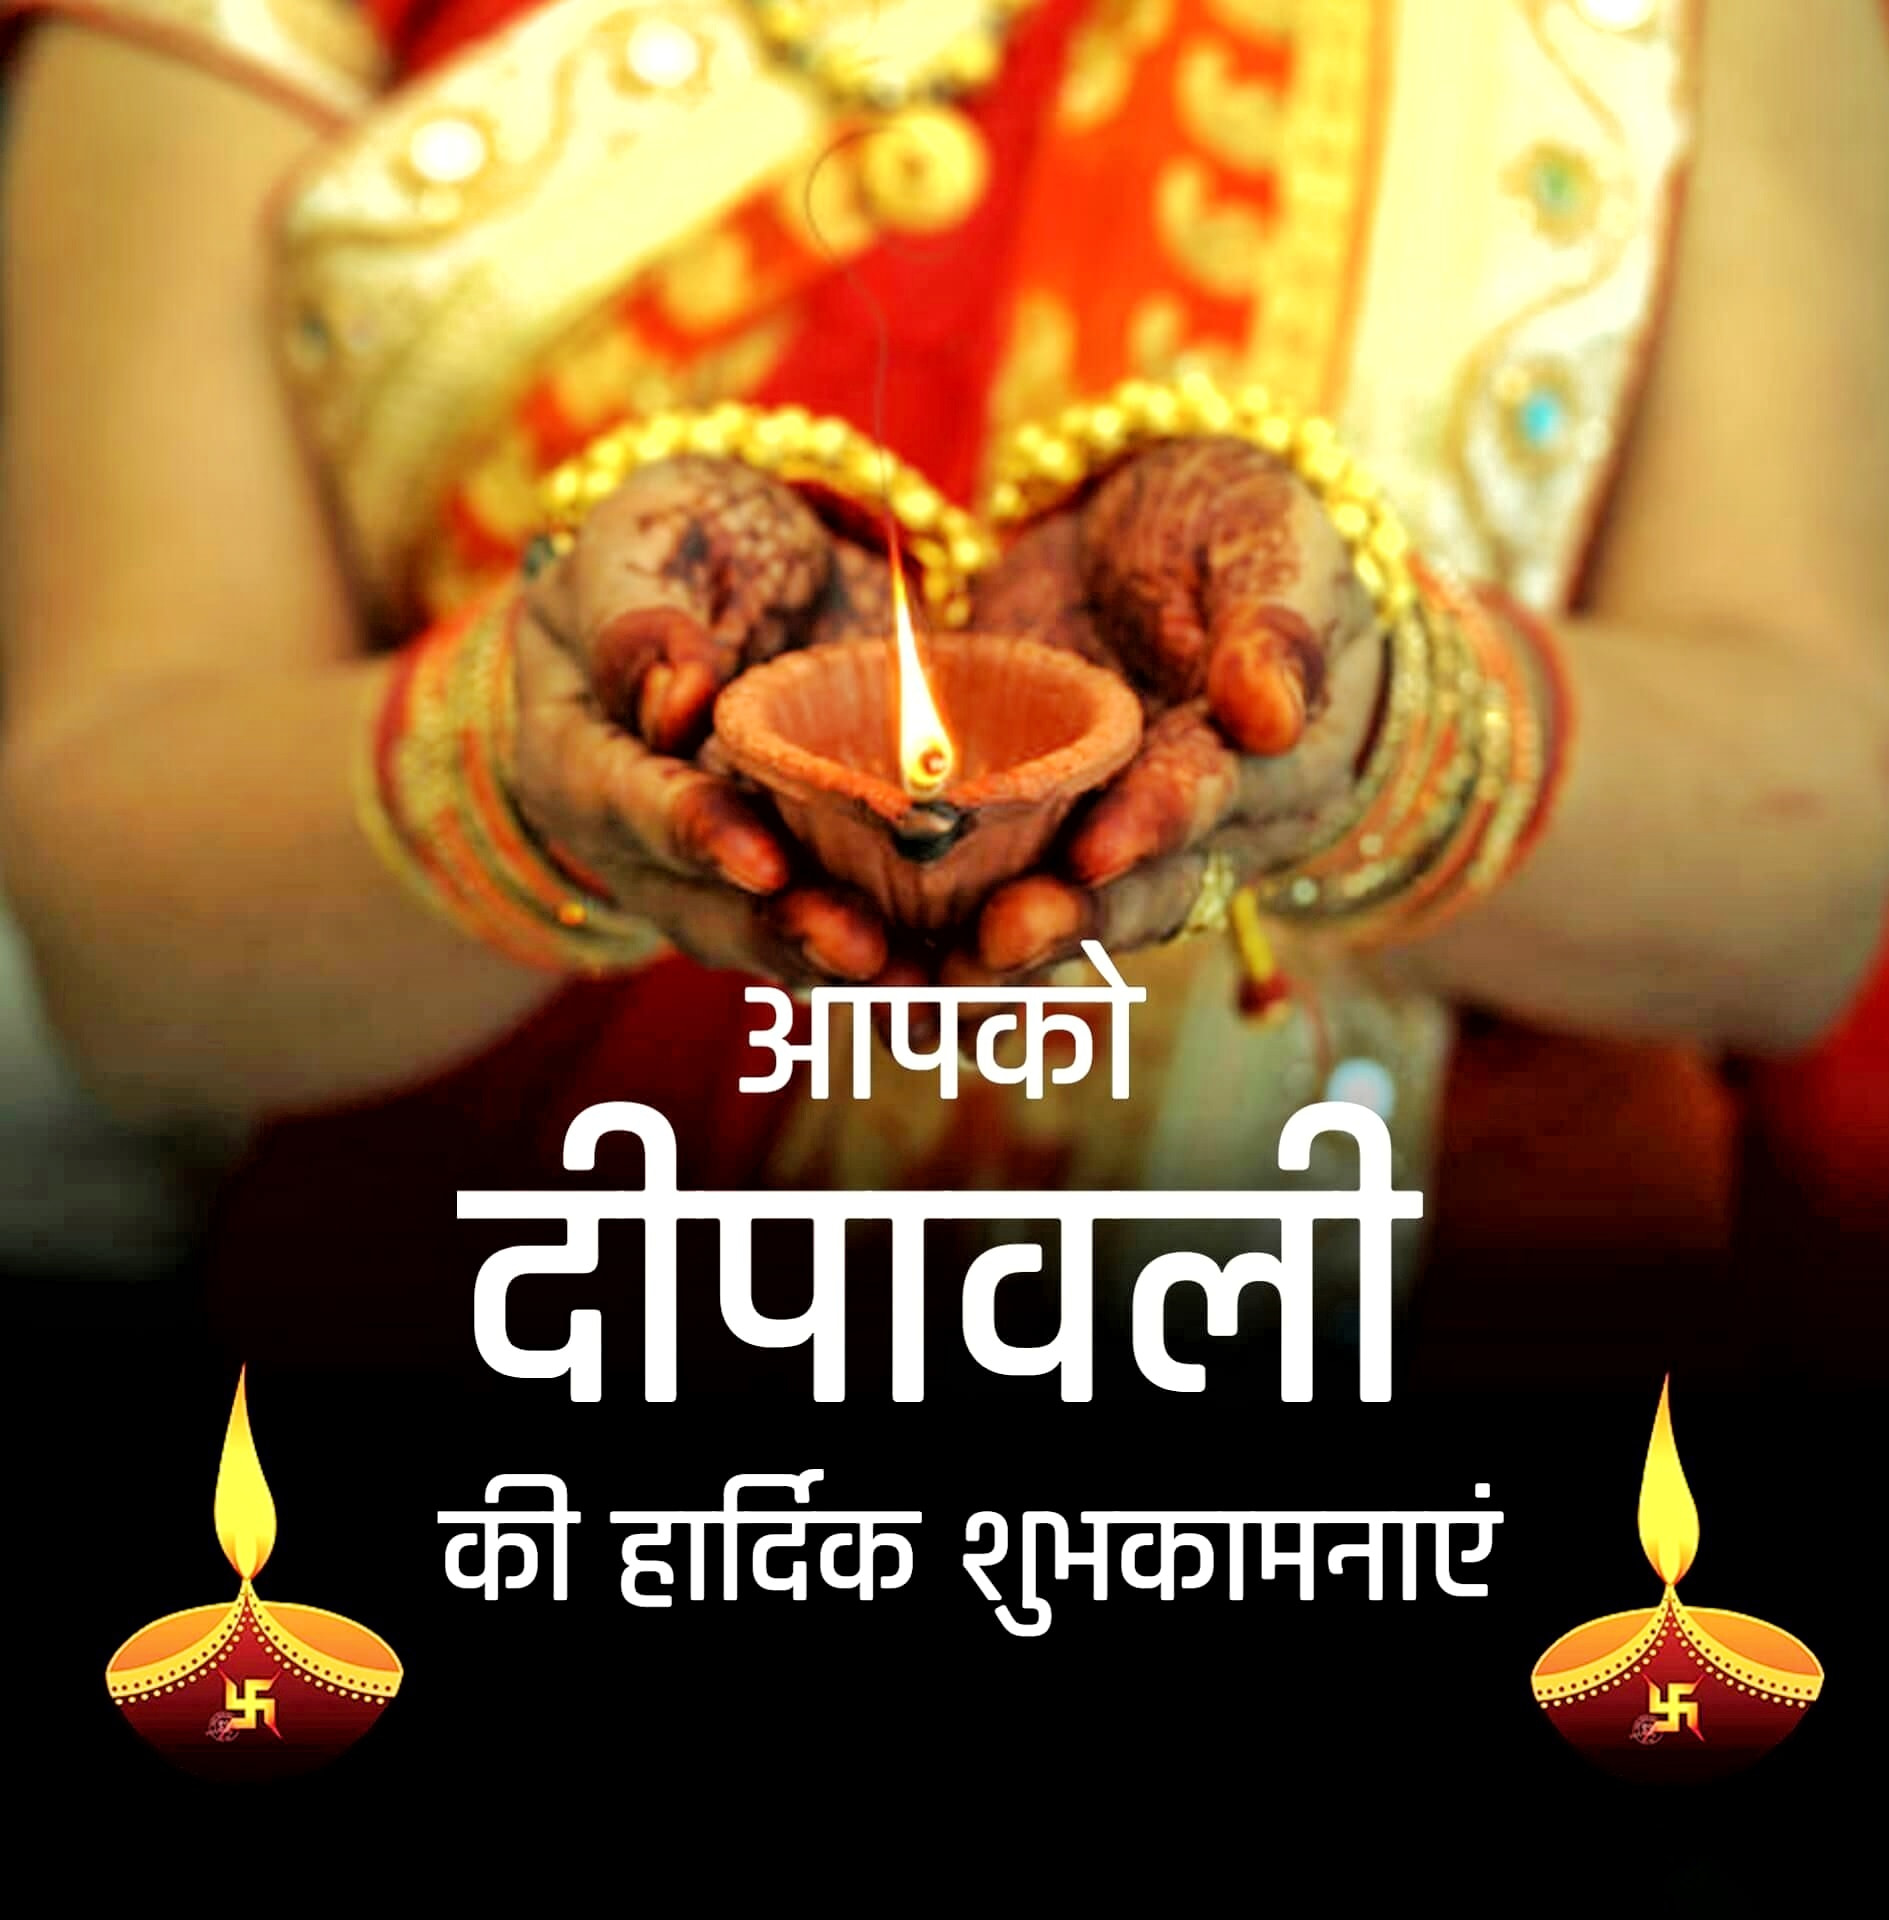 Subh Diwali Poster Image HD Free 